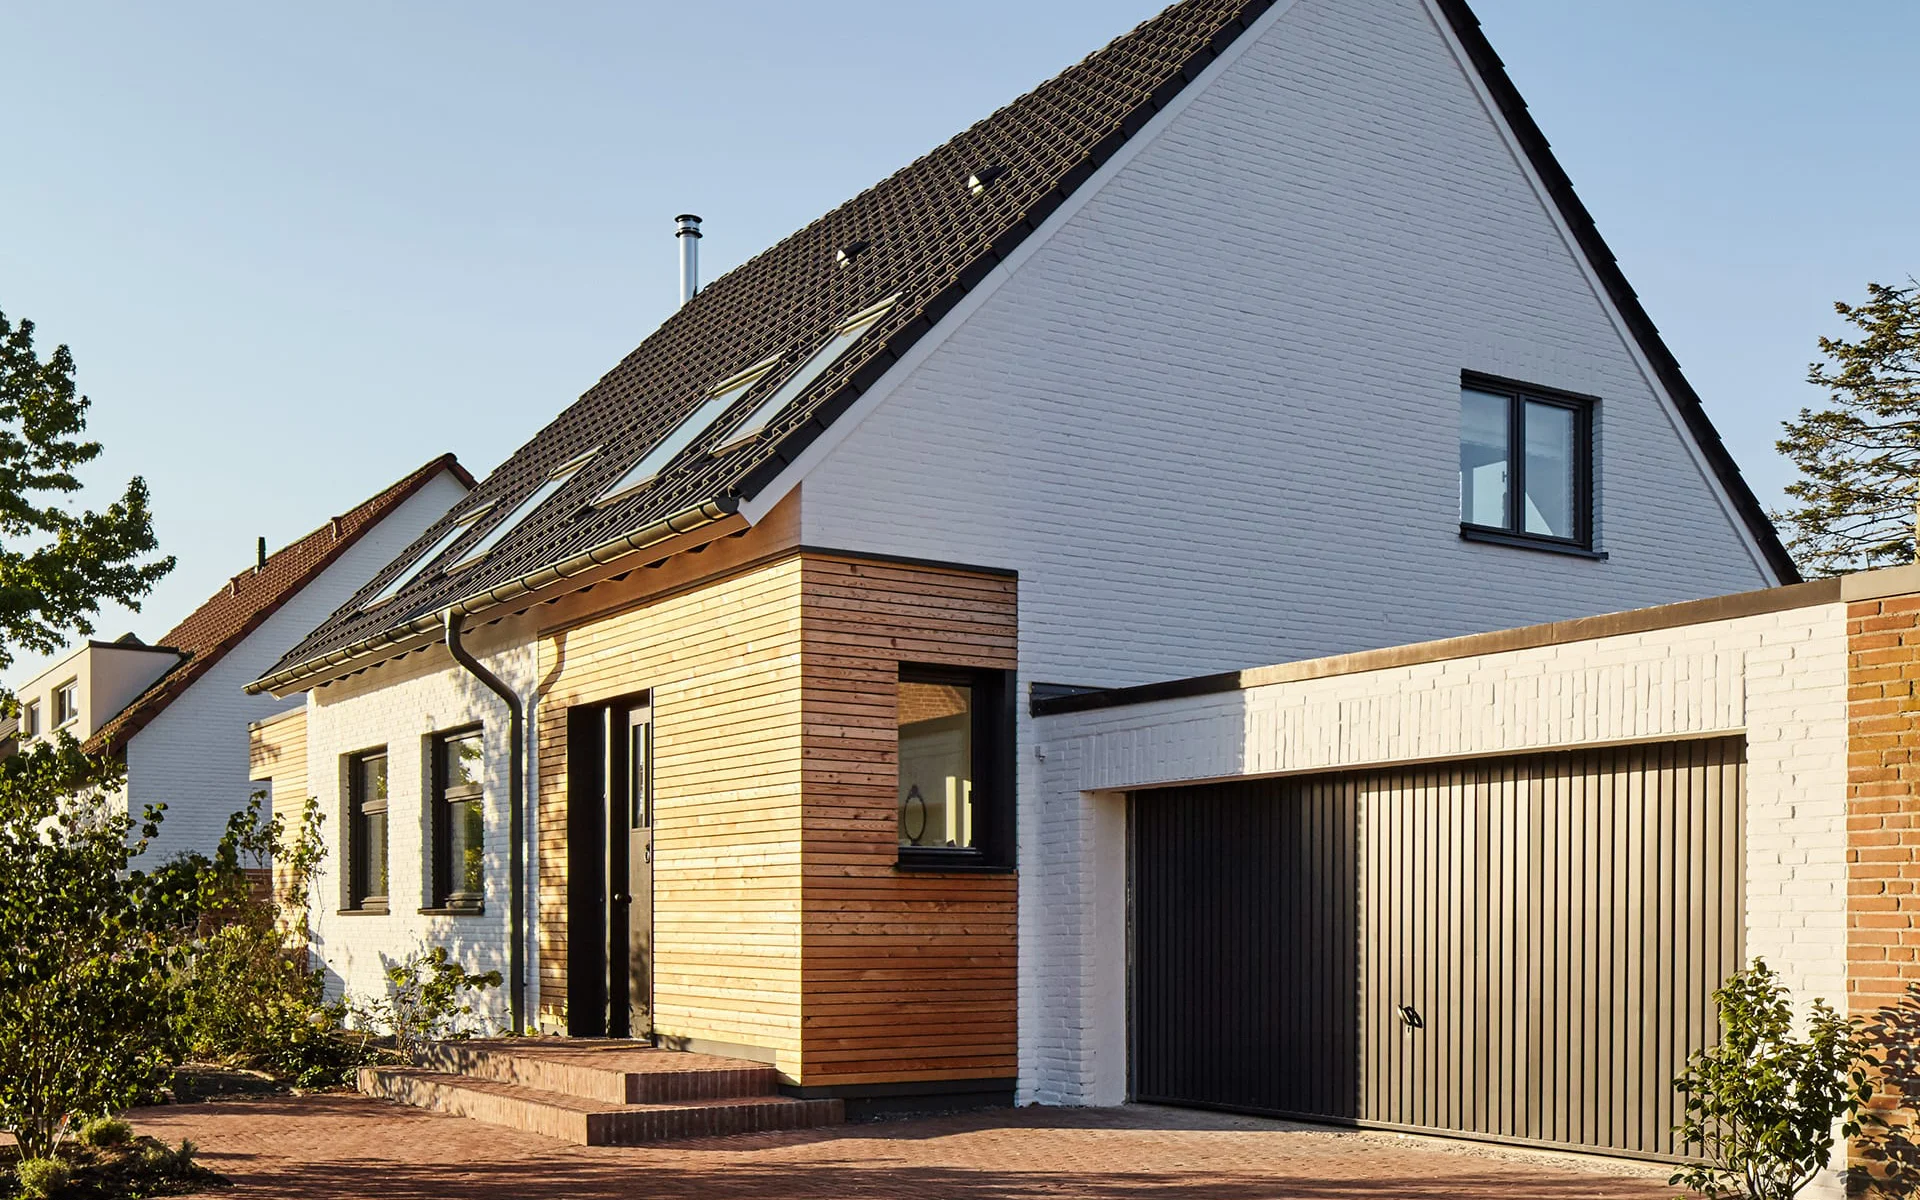 Haus mit Holzfassade am Eingang mit Garage